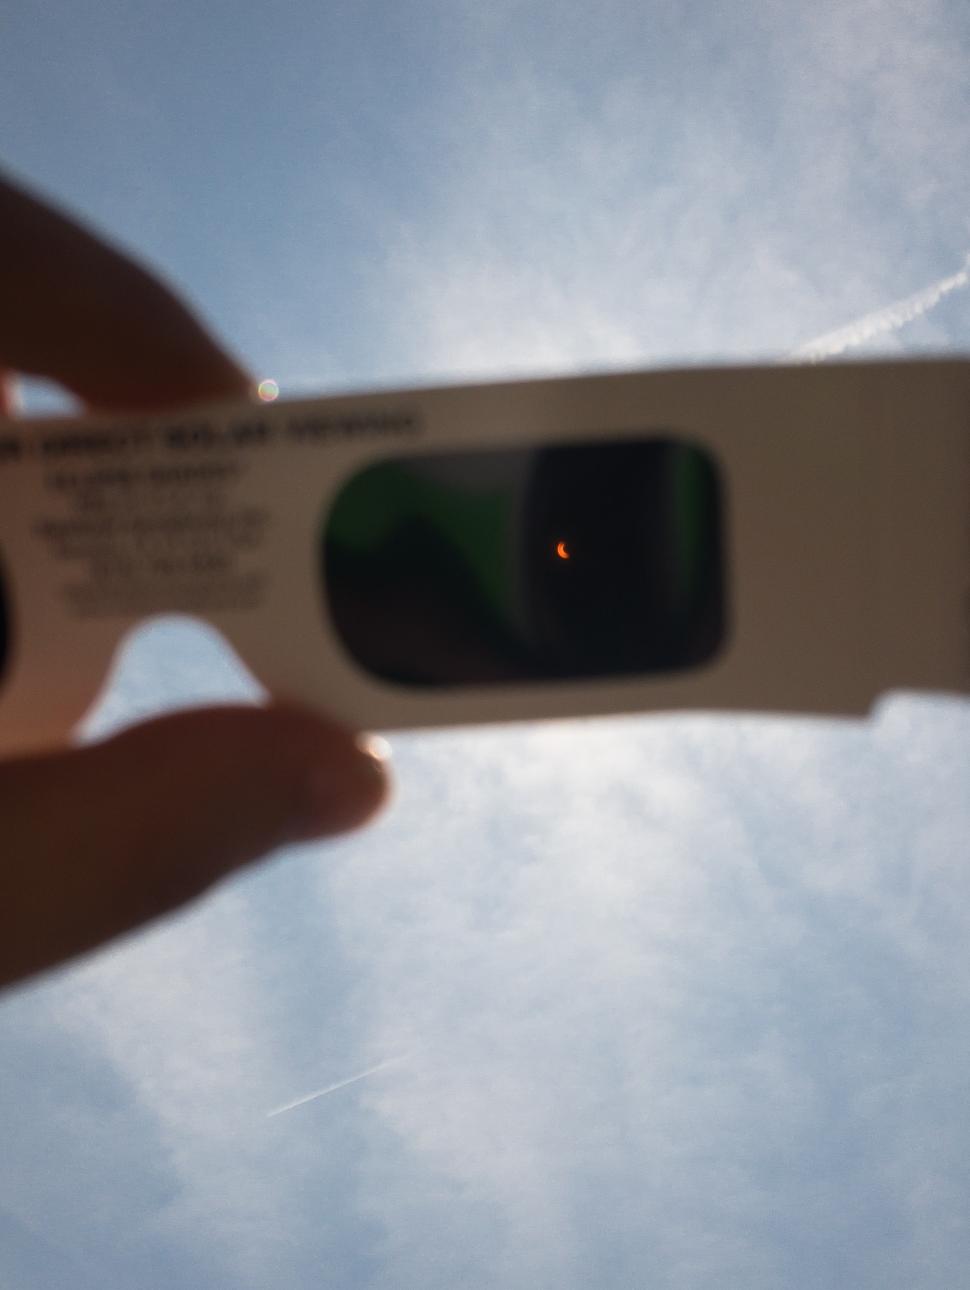 Solar eclipse glasses before the solar eclipse